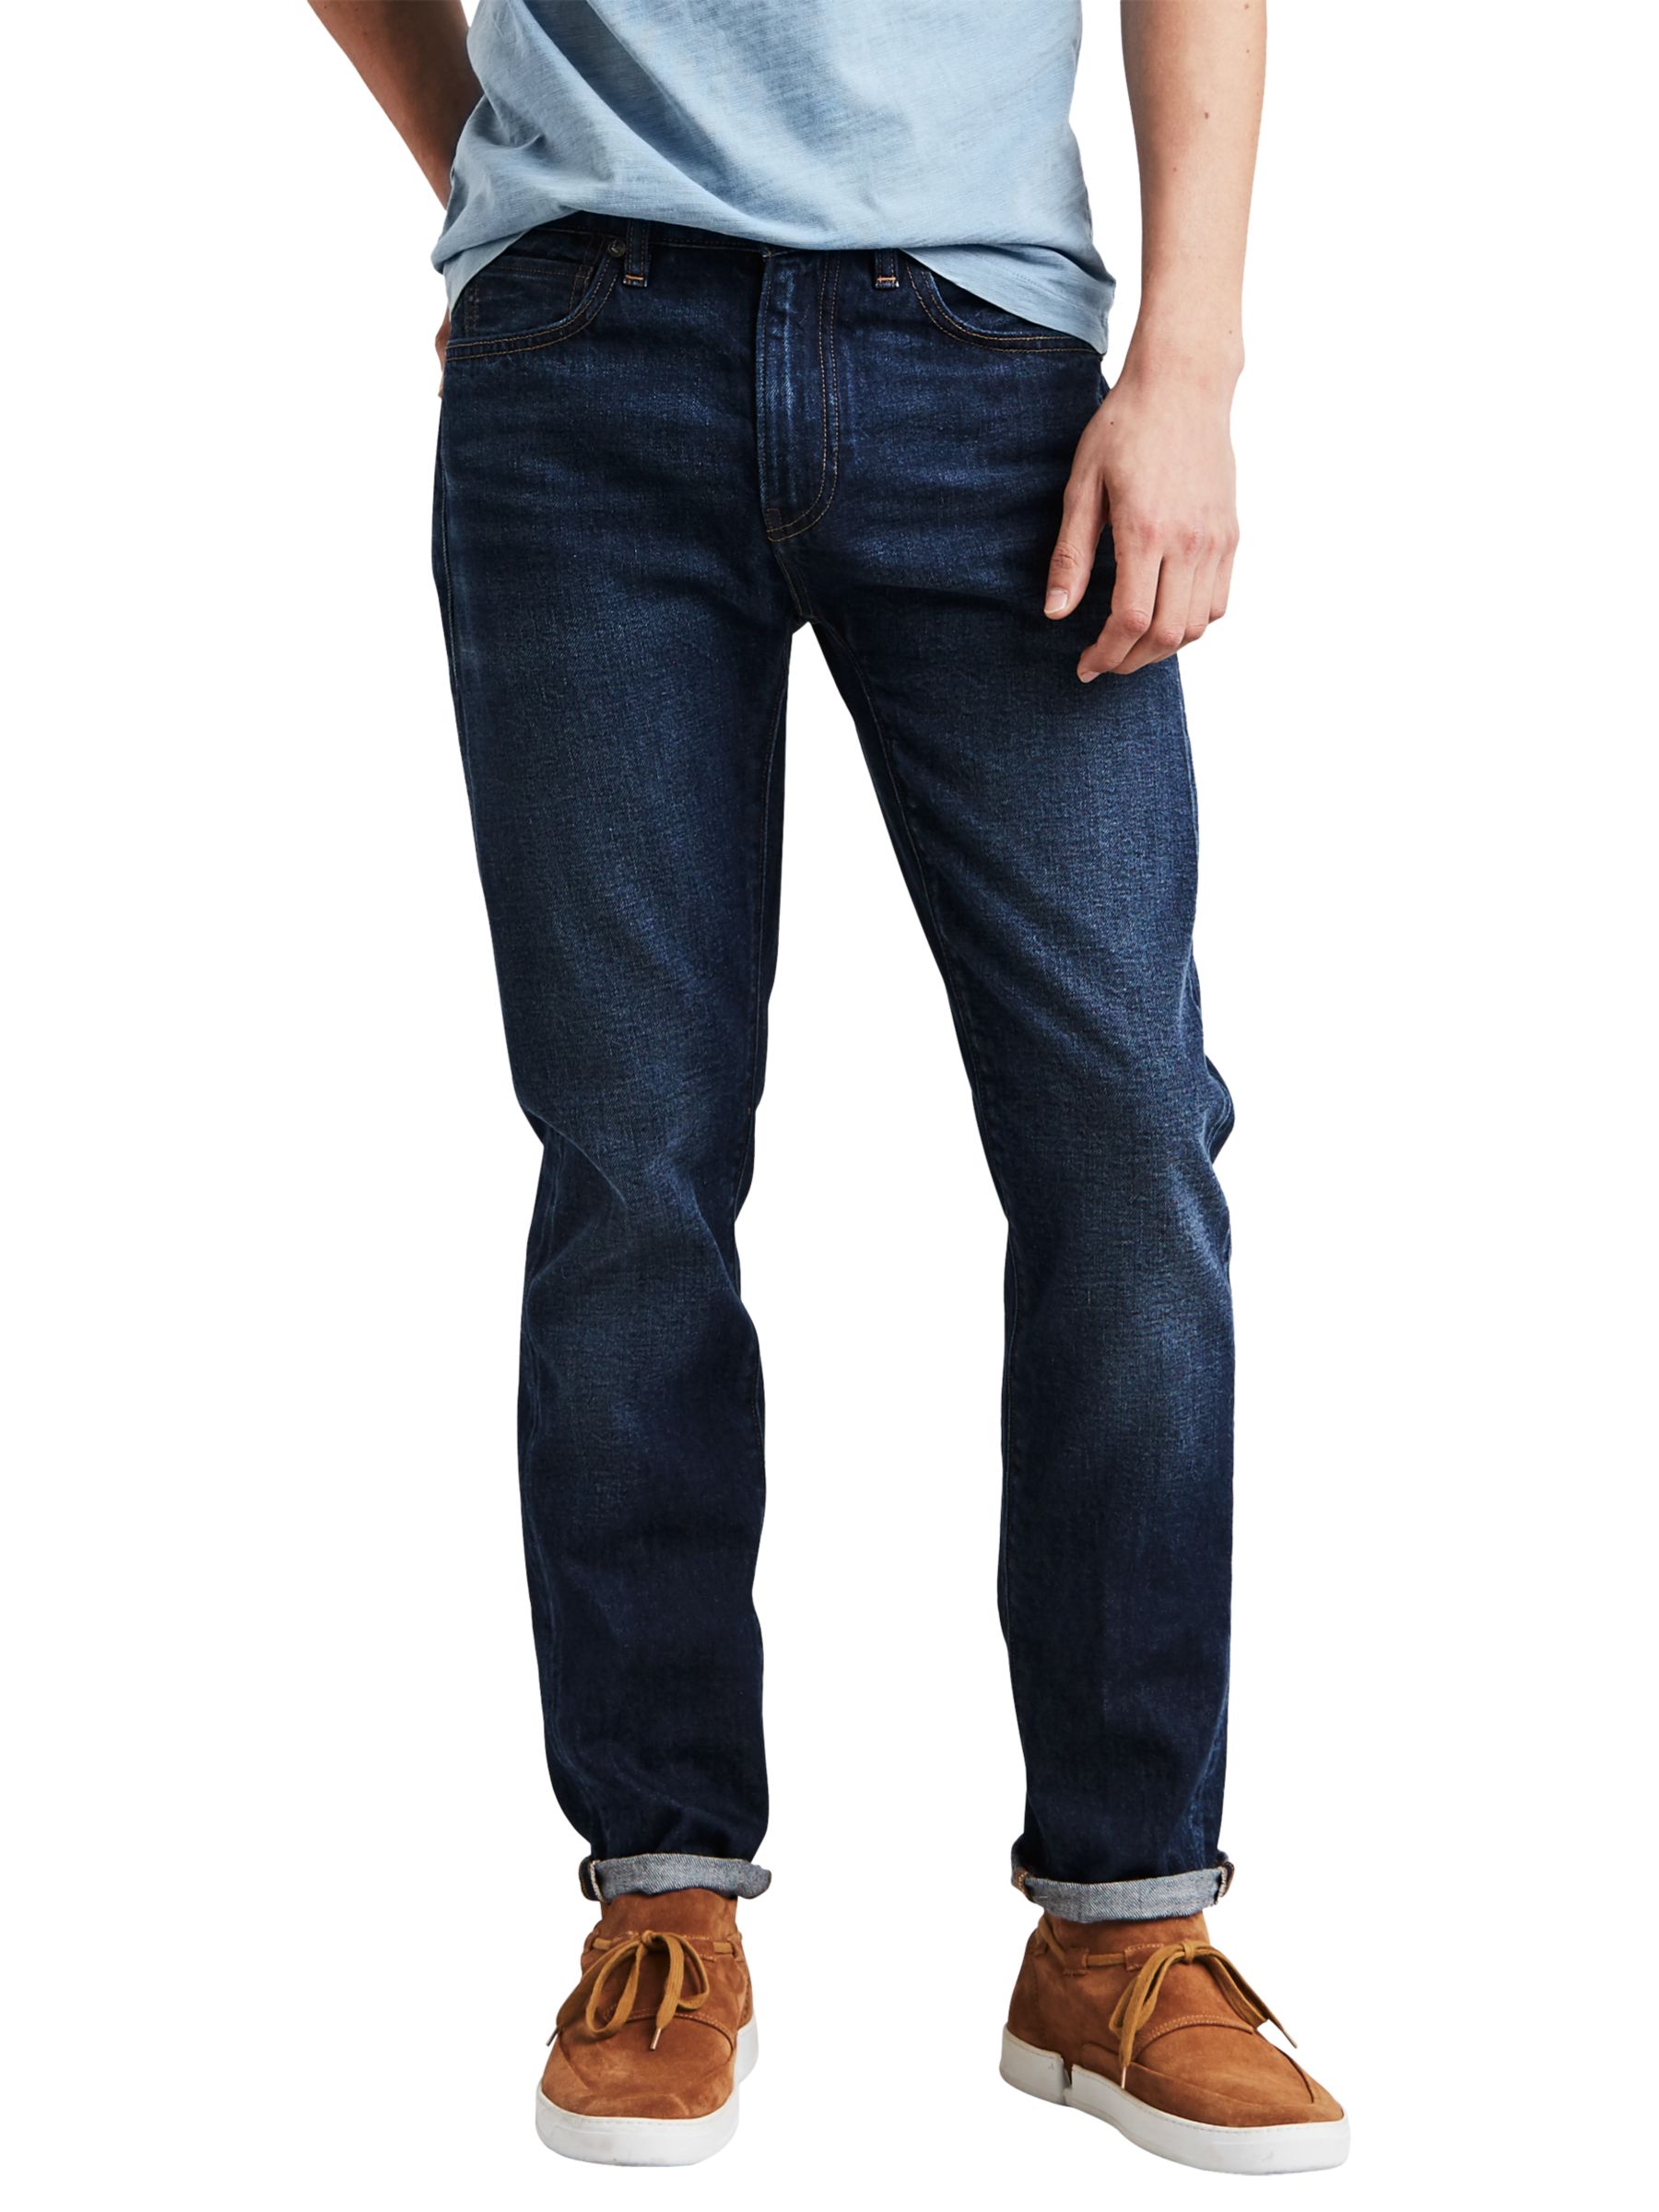 Levi's Made & Crafted Tack Slim Fit Jeans, Bundoran